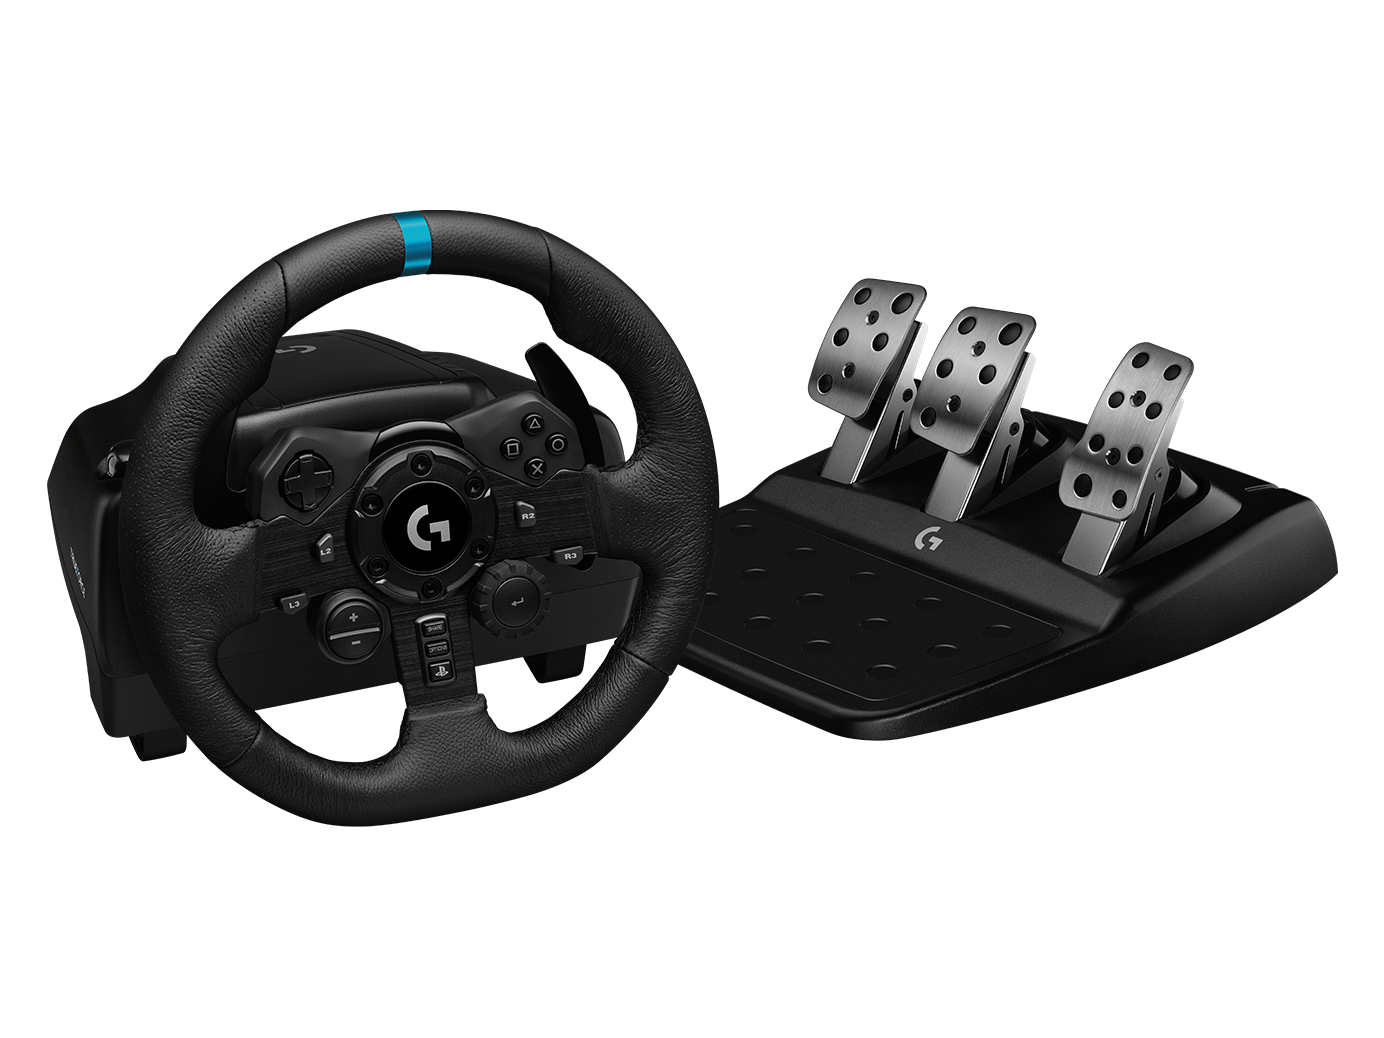 Jeugd Klaar delicaat Logitech G923 TRUEFORCE Sim Racing Wheel for Xbox, Playstation and PC